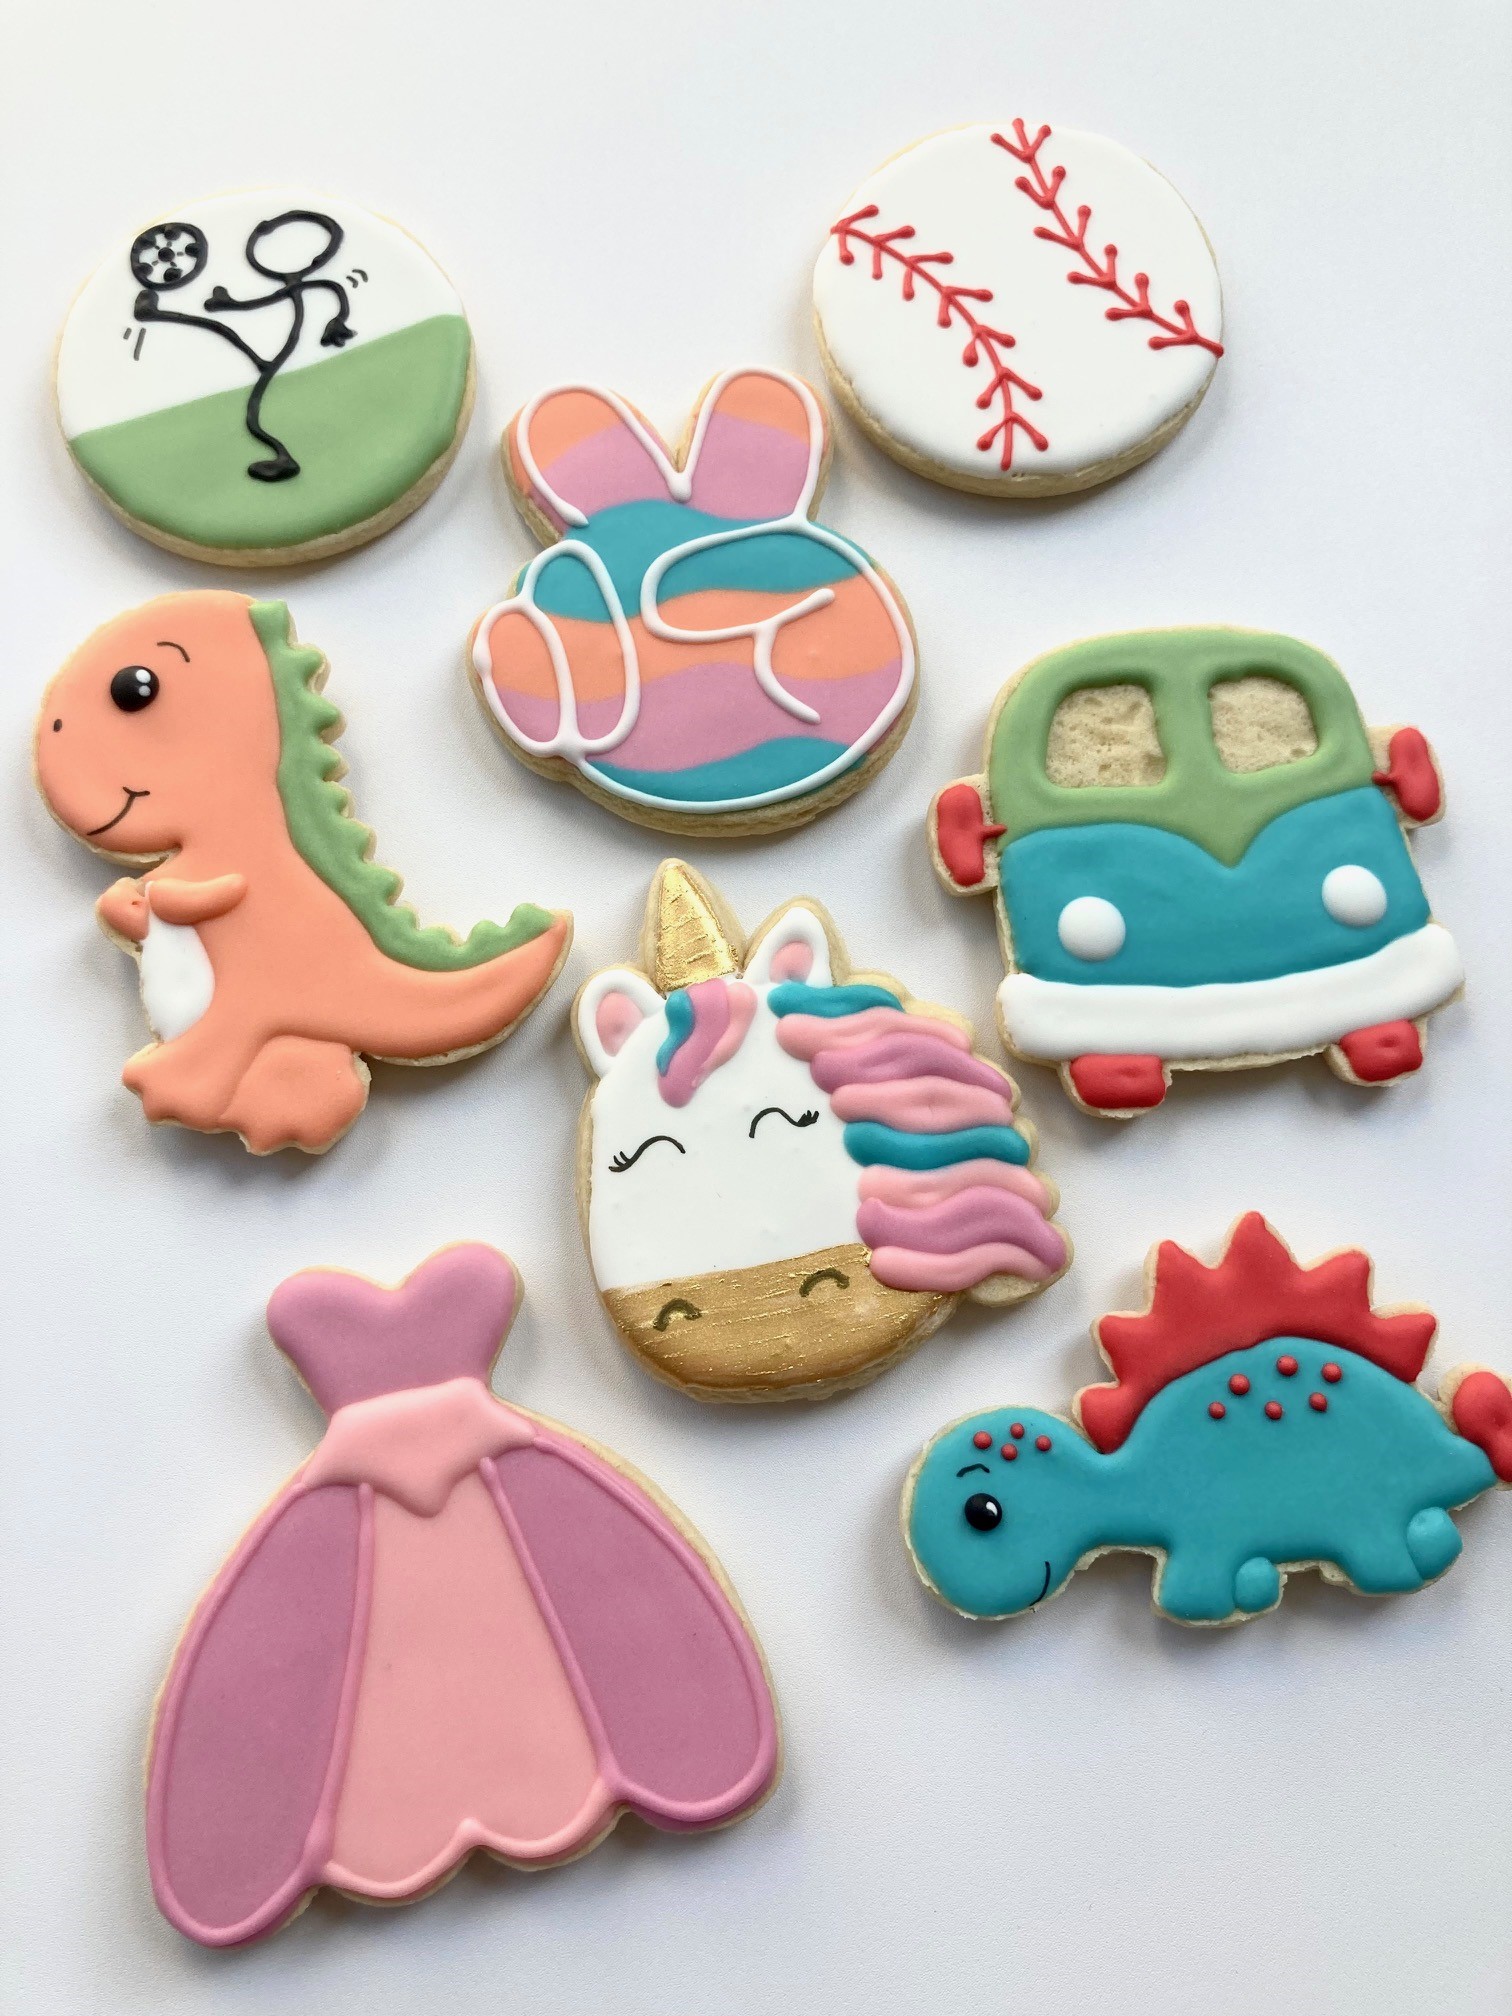 Assorted sugar cookie design